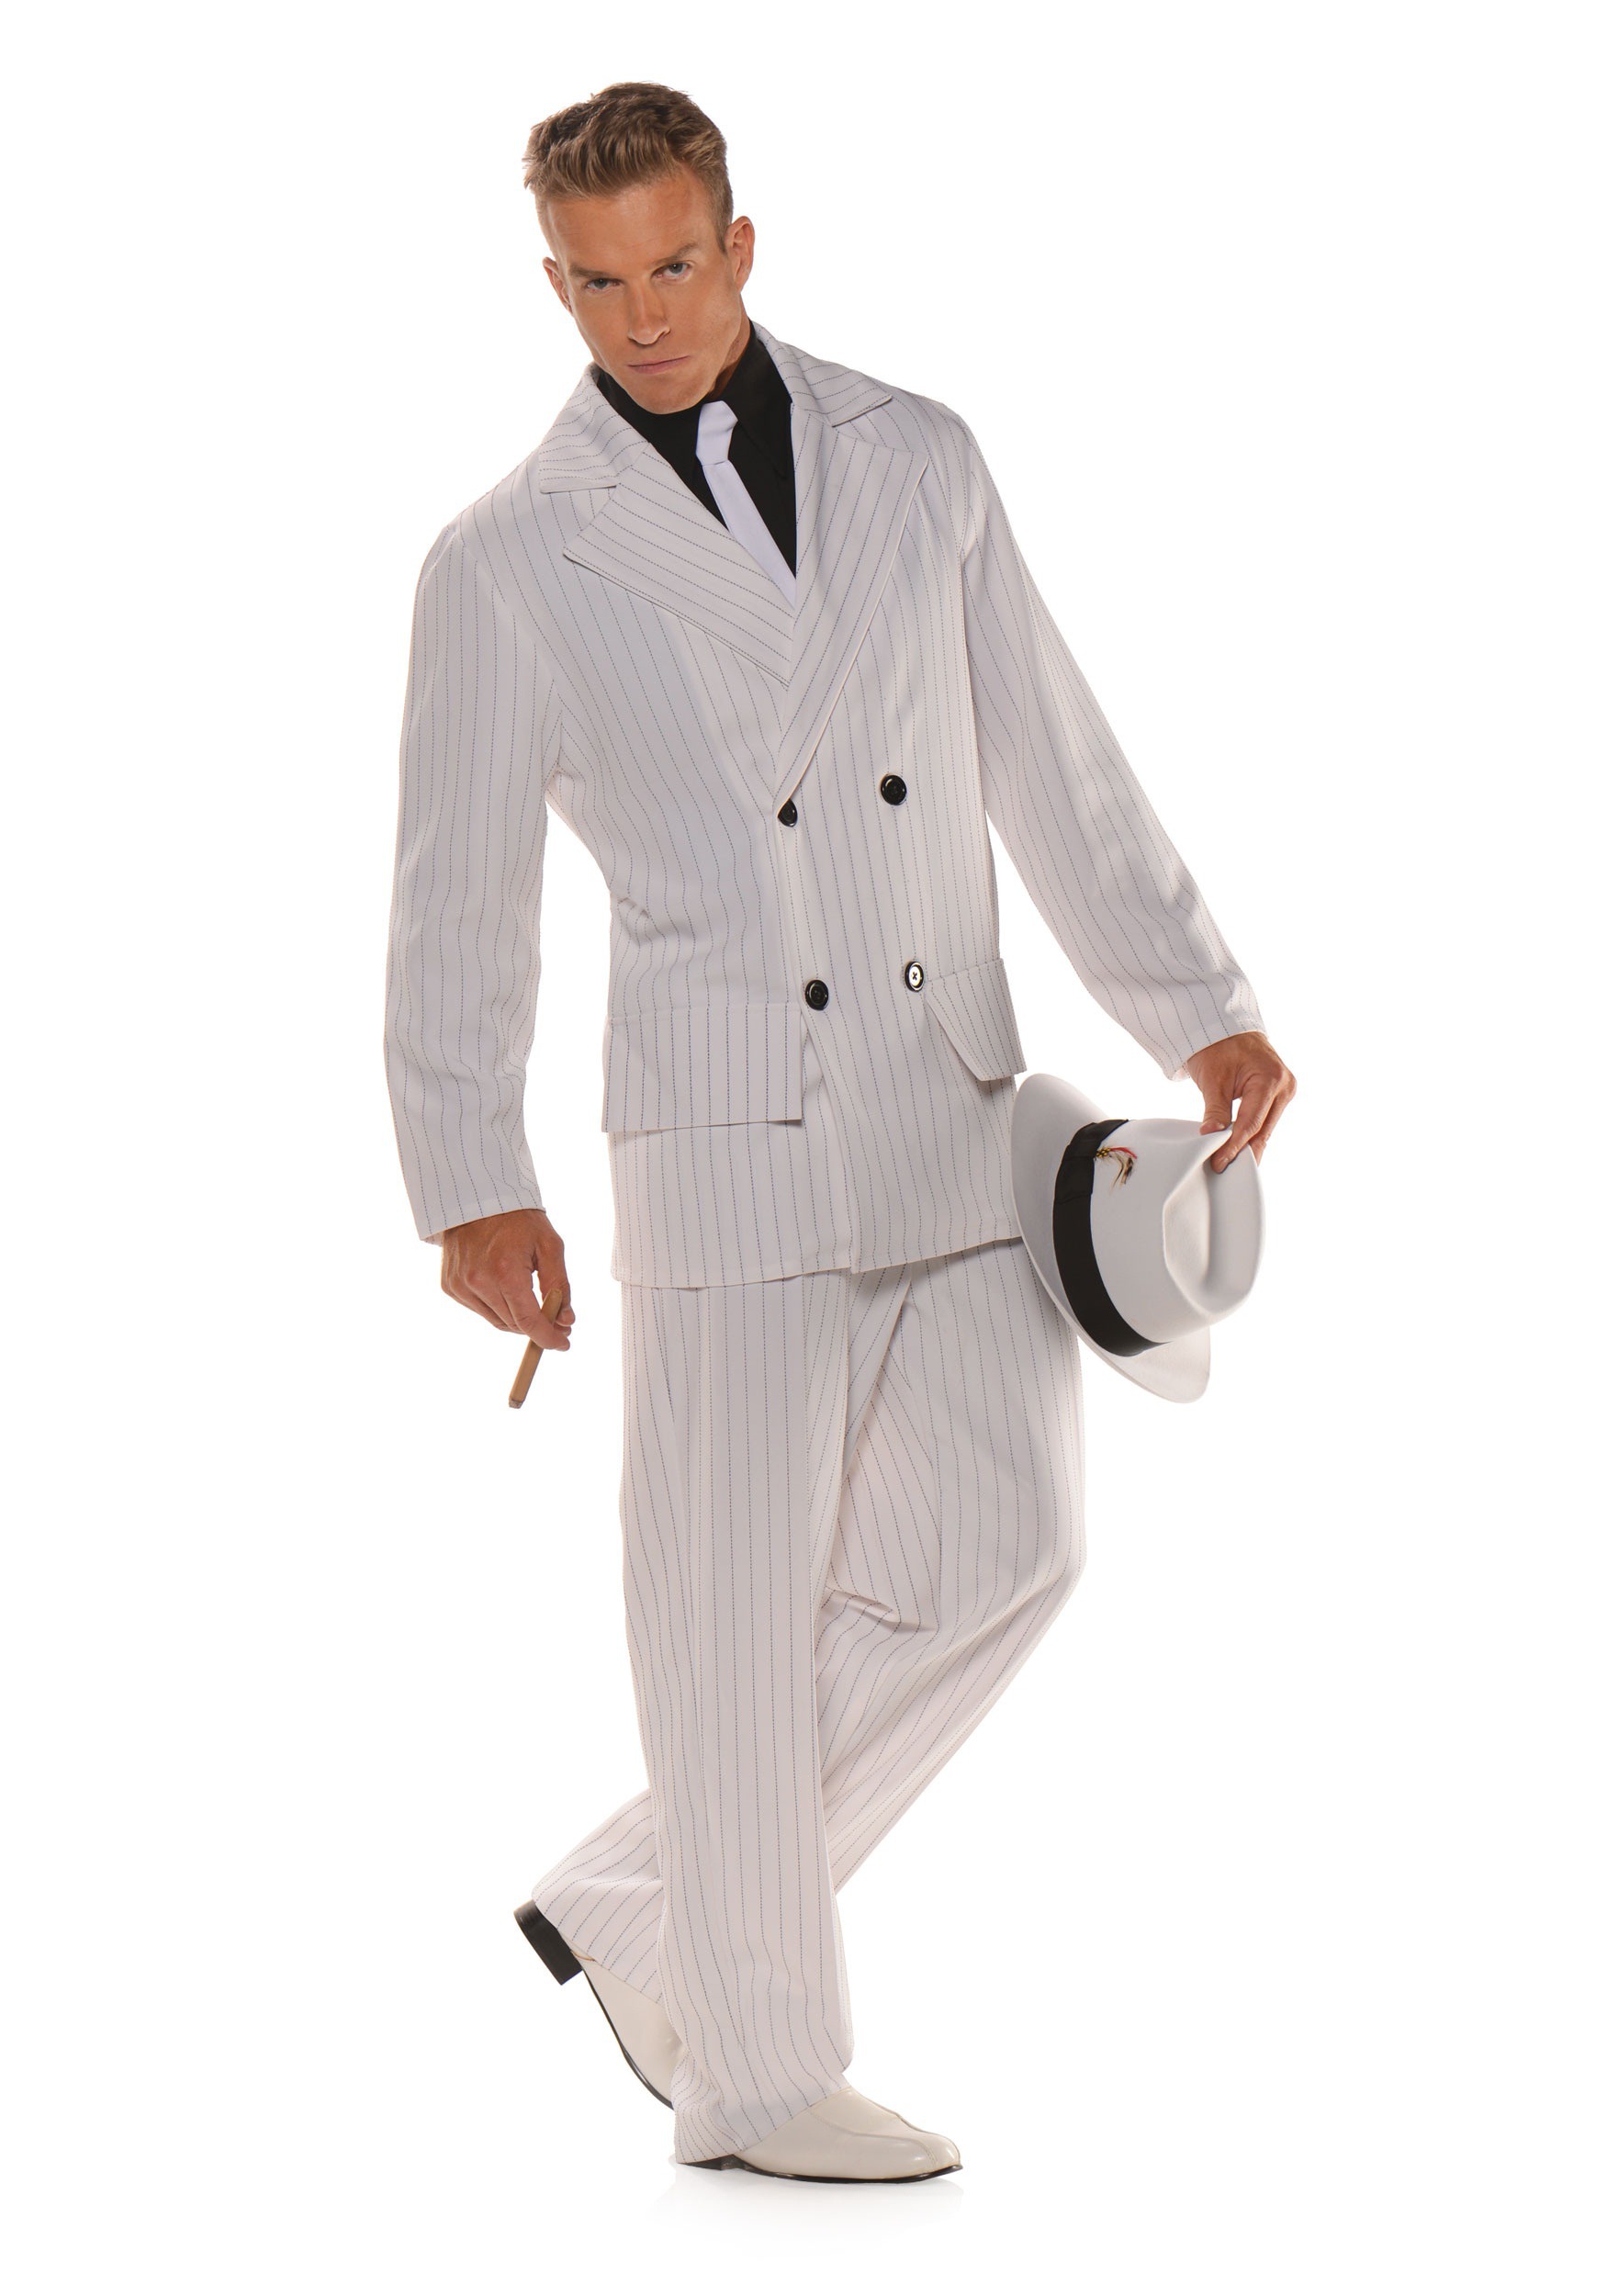 Michael Jackson Costume Ideas for Men at SimplyEighties.com